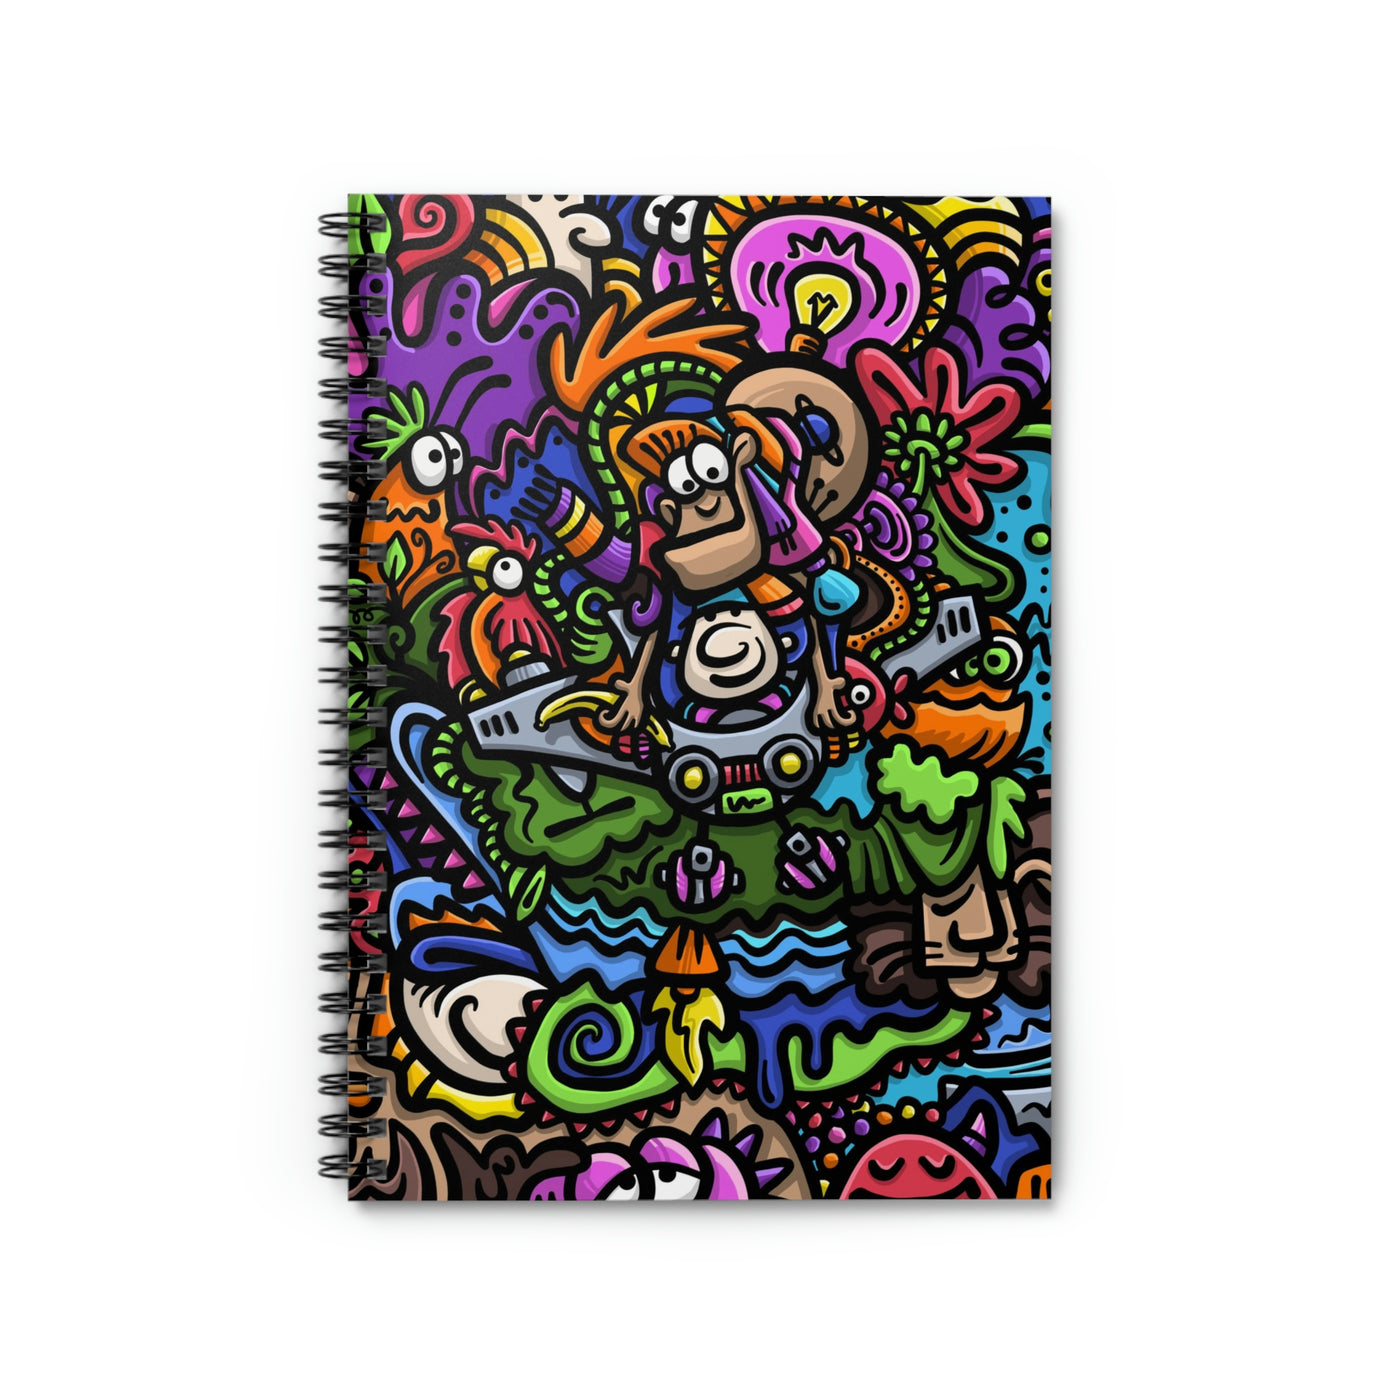 Monkey See Monkey Do Spiral Notebook